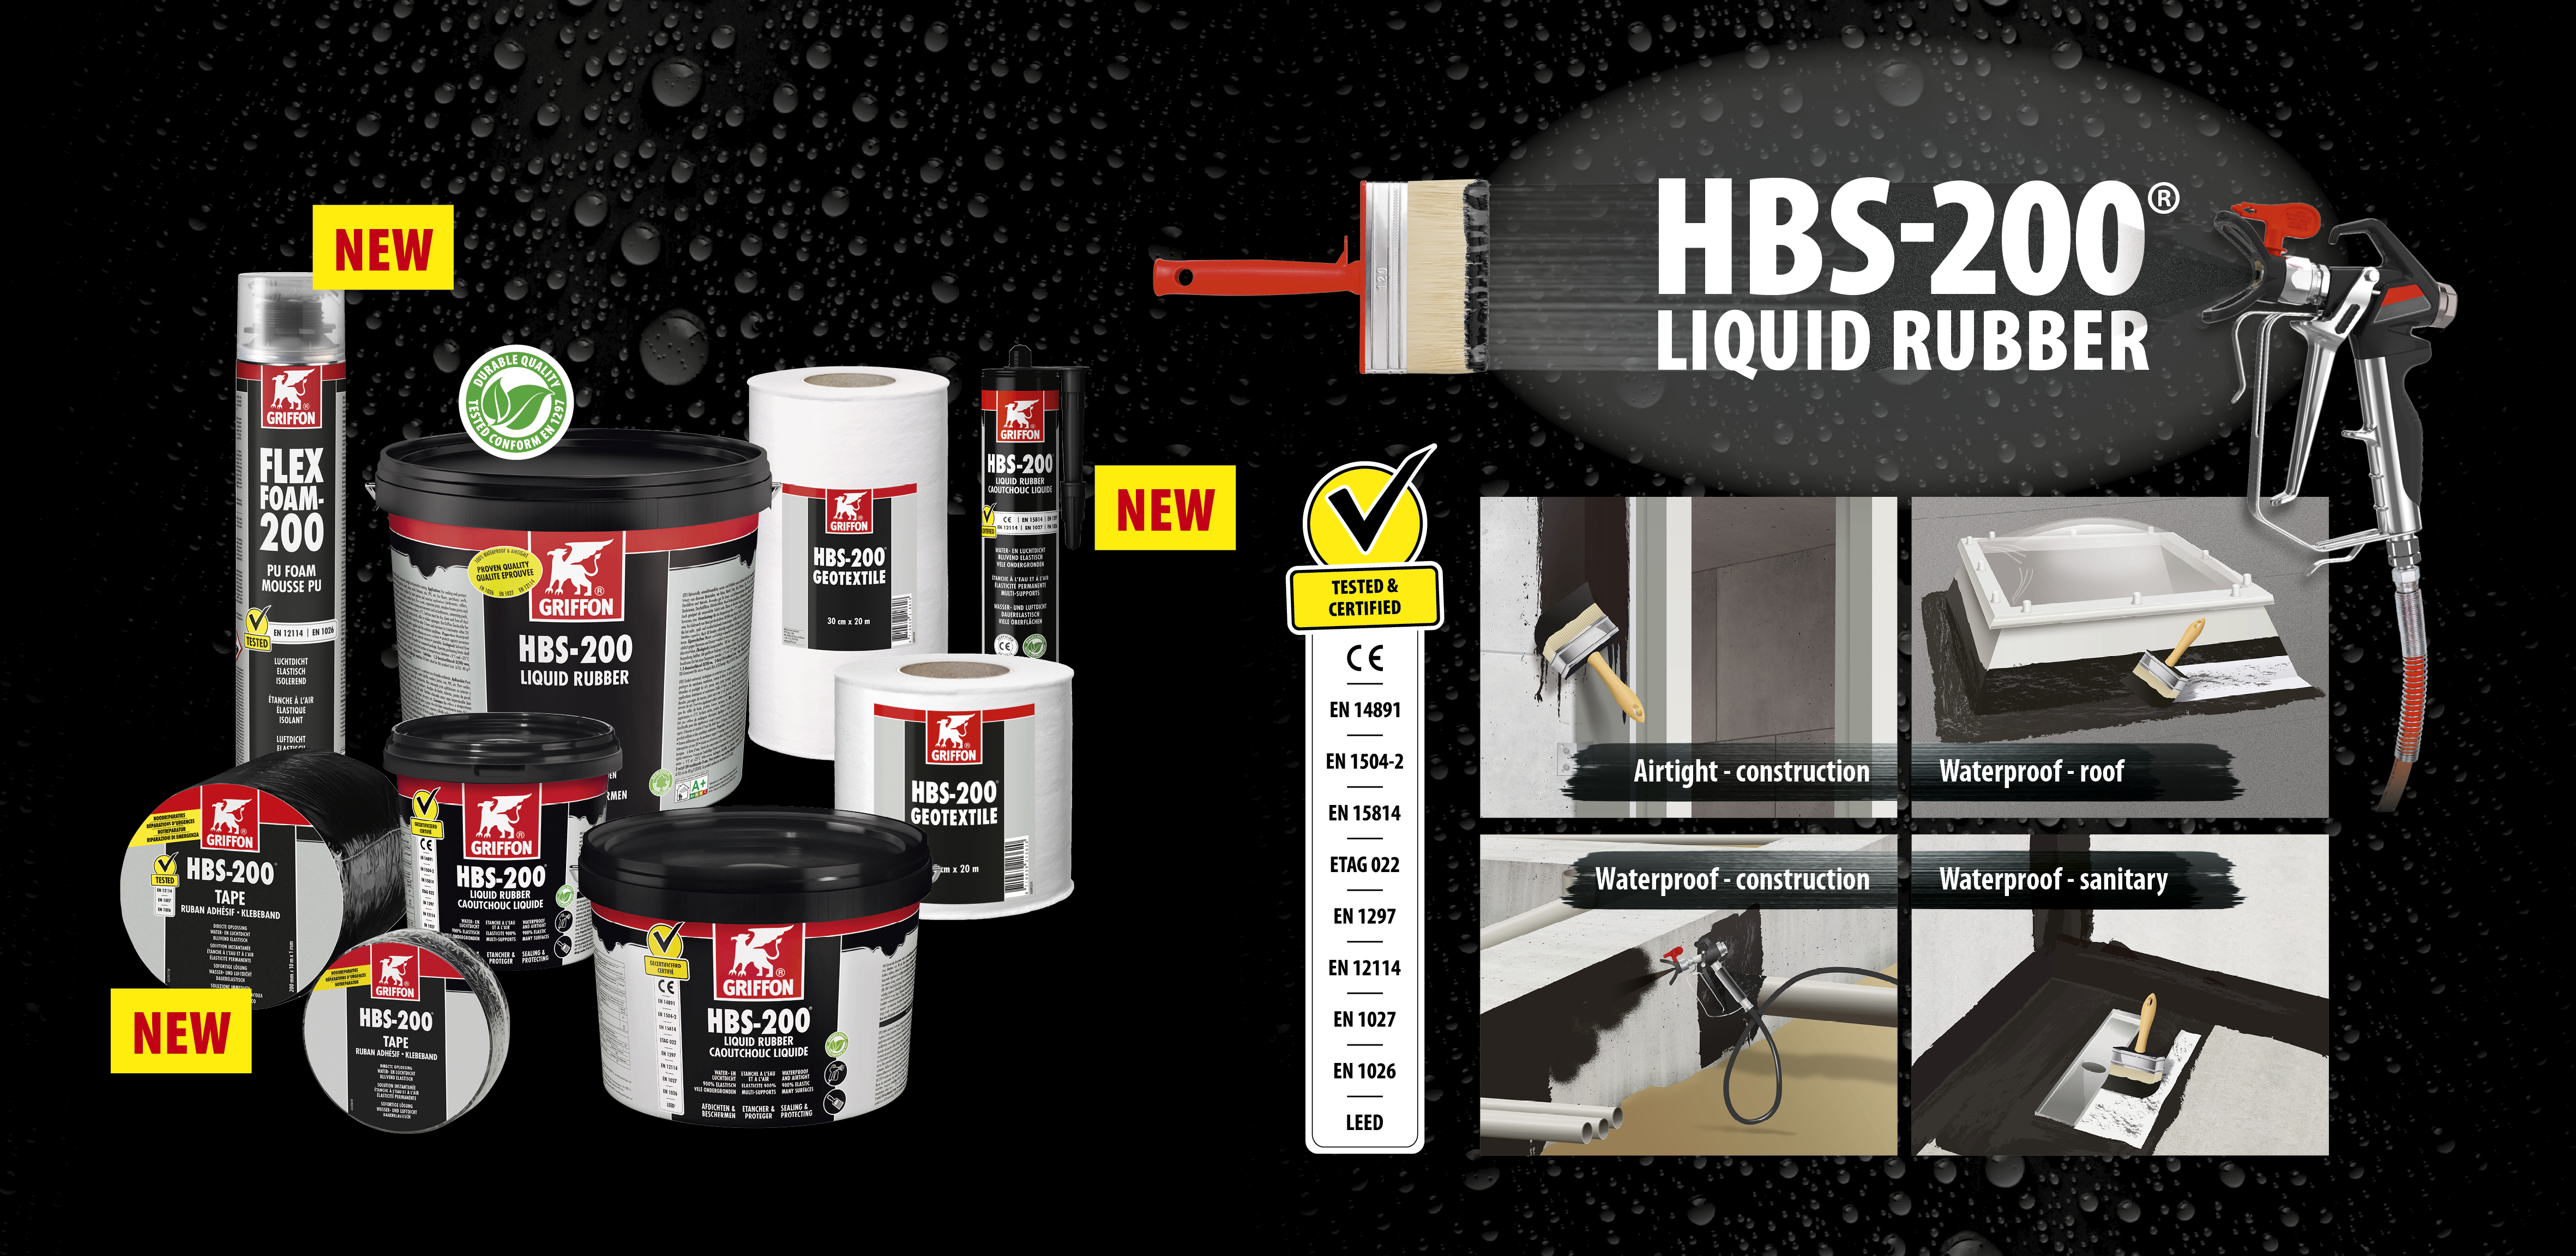 HBS-200 liquid rubber